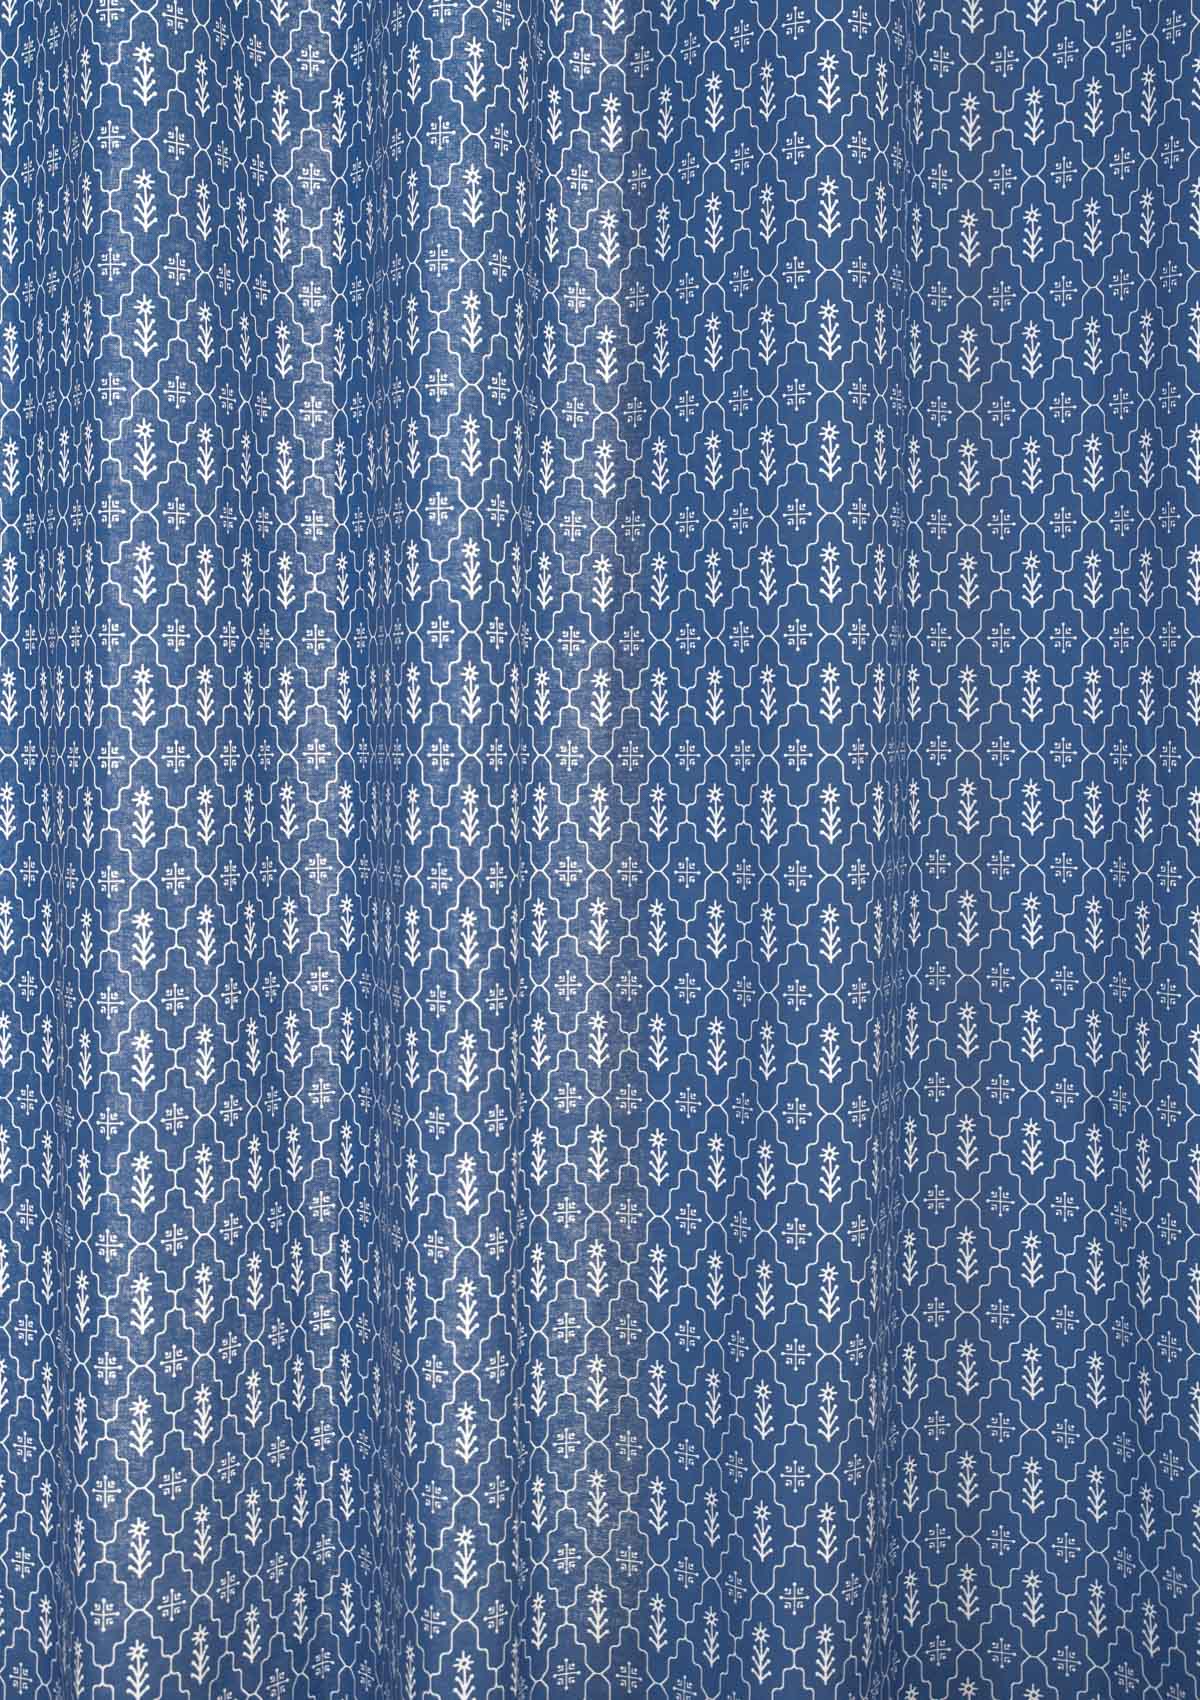 Meadows 100% cotton geometric customisable curtain for bed room - Room darkening - Indigo